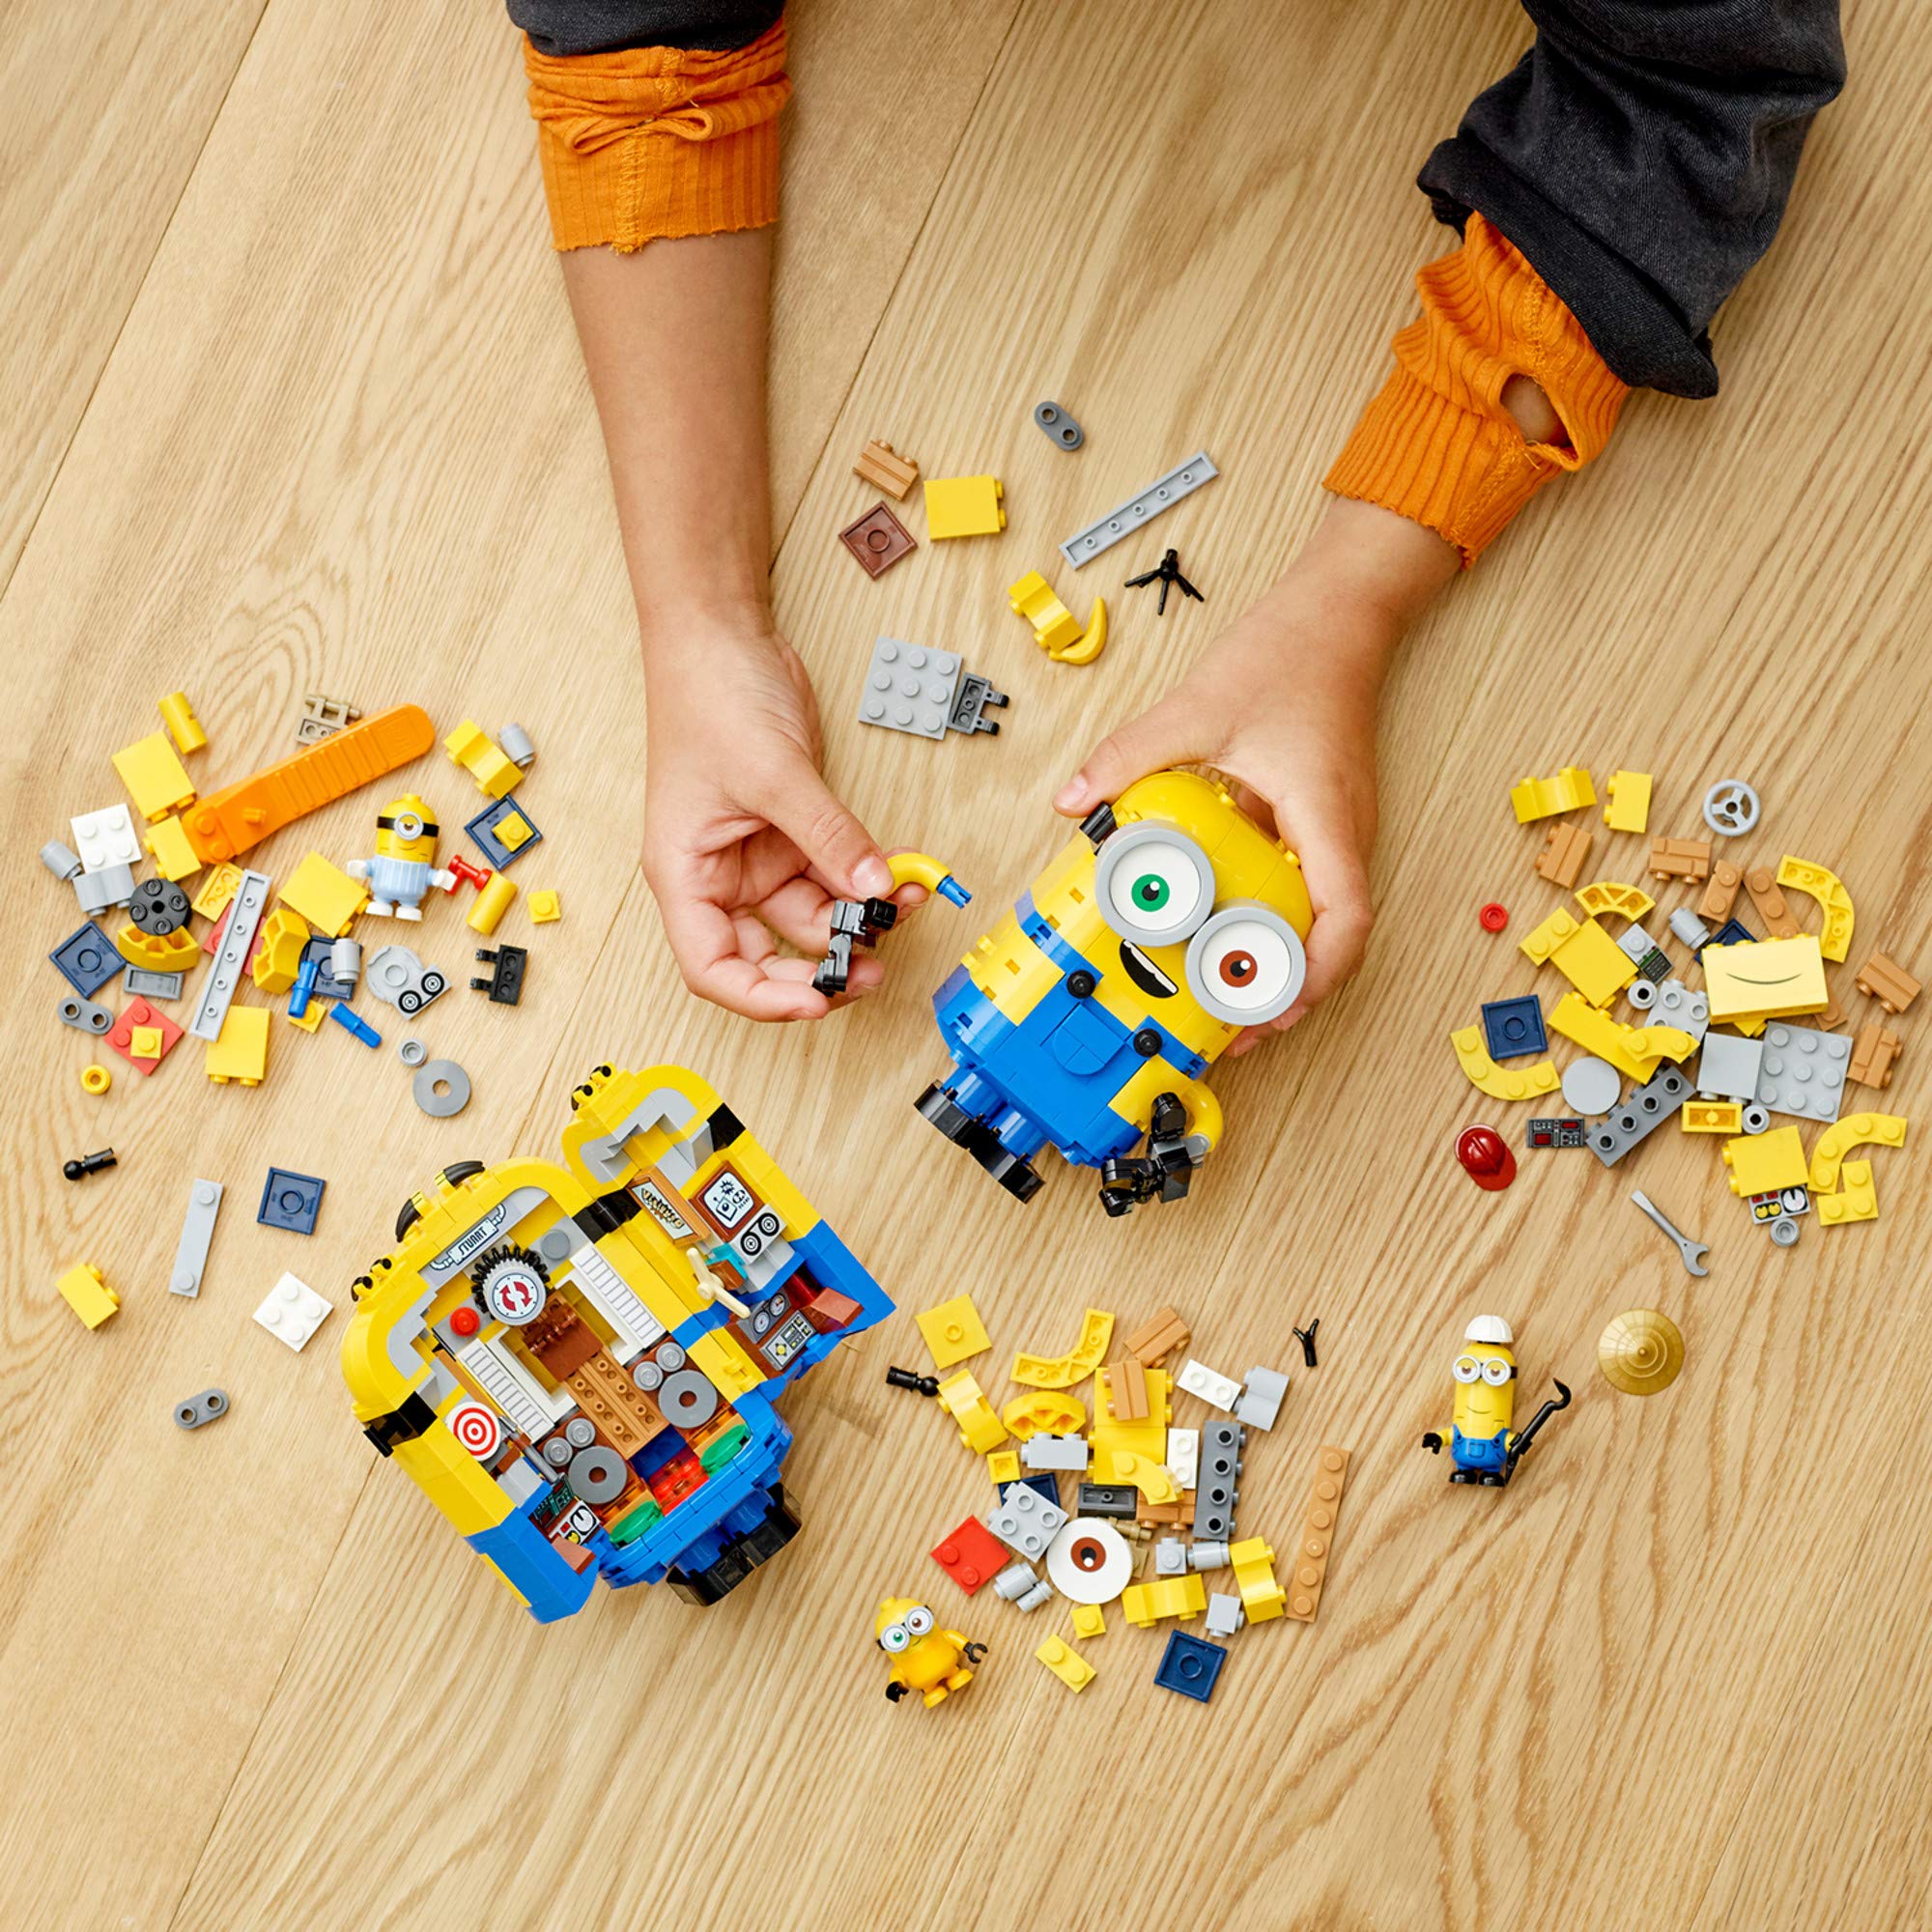 LEGO Minions: Brick-Built Minions and Their Lair 75551 (876 Pieces)